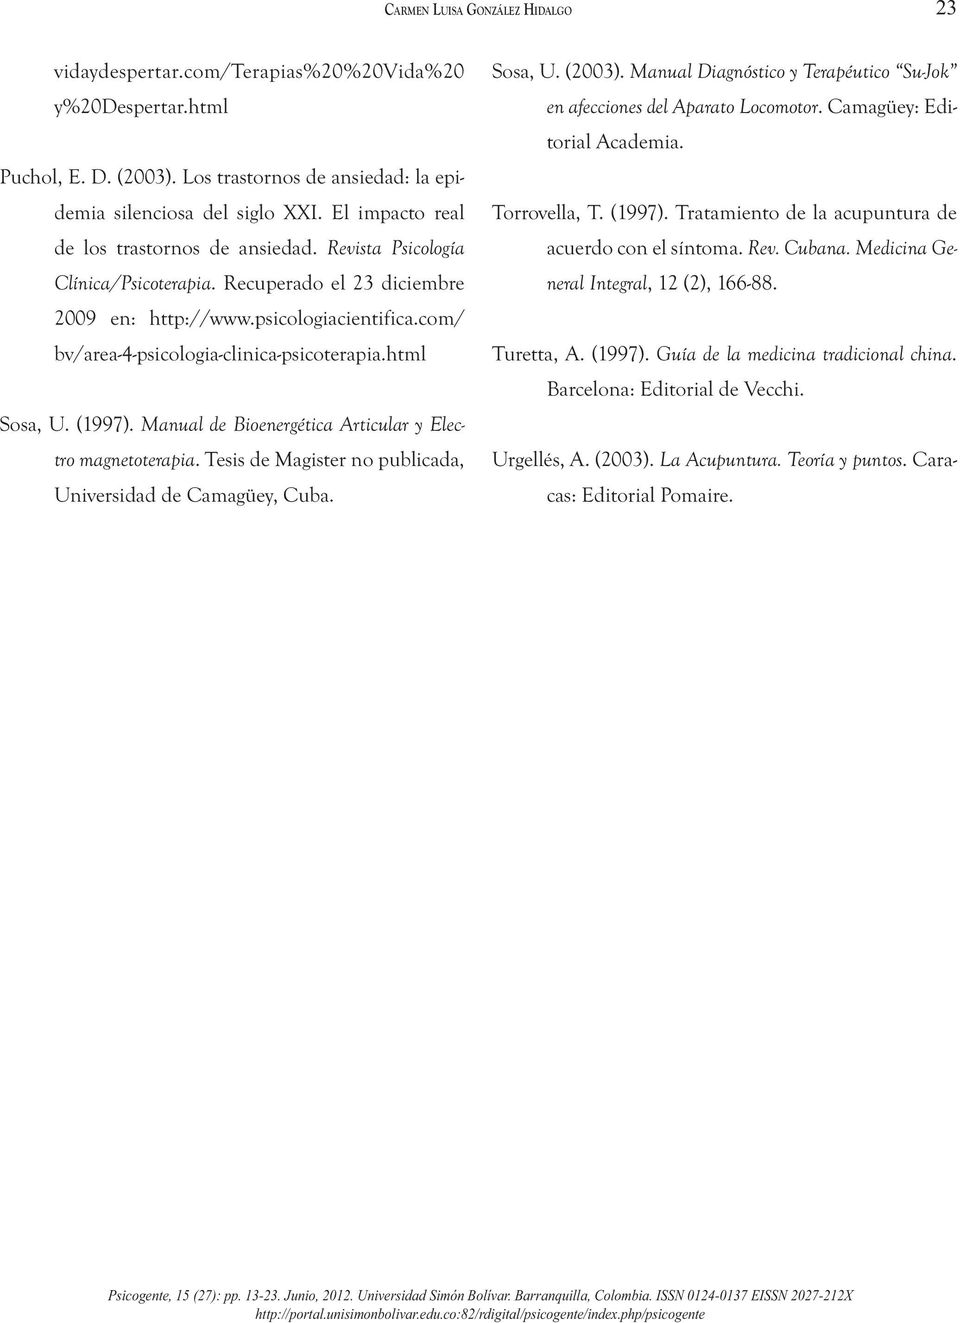 com/ bv/area-4-psicologia-clinica-psicoterapia.html Sosa, U. (1997). Manual de Bioenergética Articular y Electro magnetoterapia. Tesis de Magister no publicada, Universidad de Camagüey, Cuba. Sosa, U. (2003).